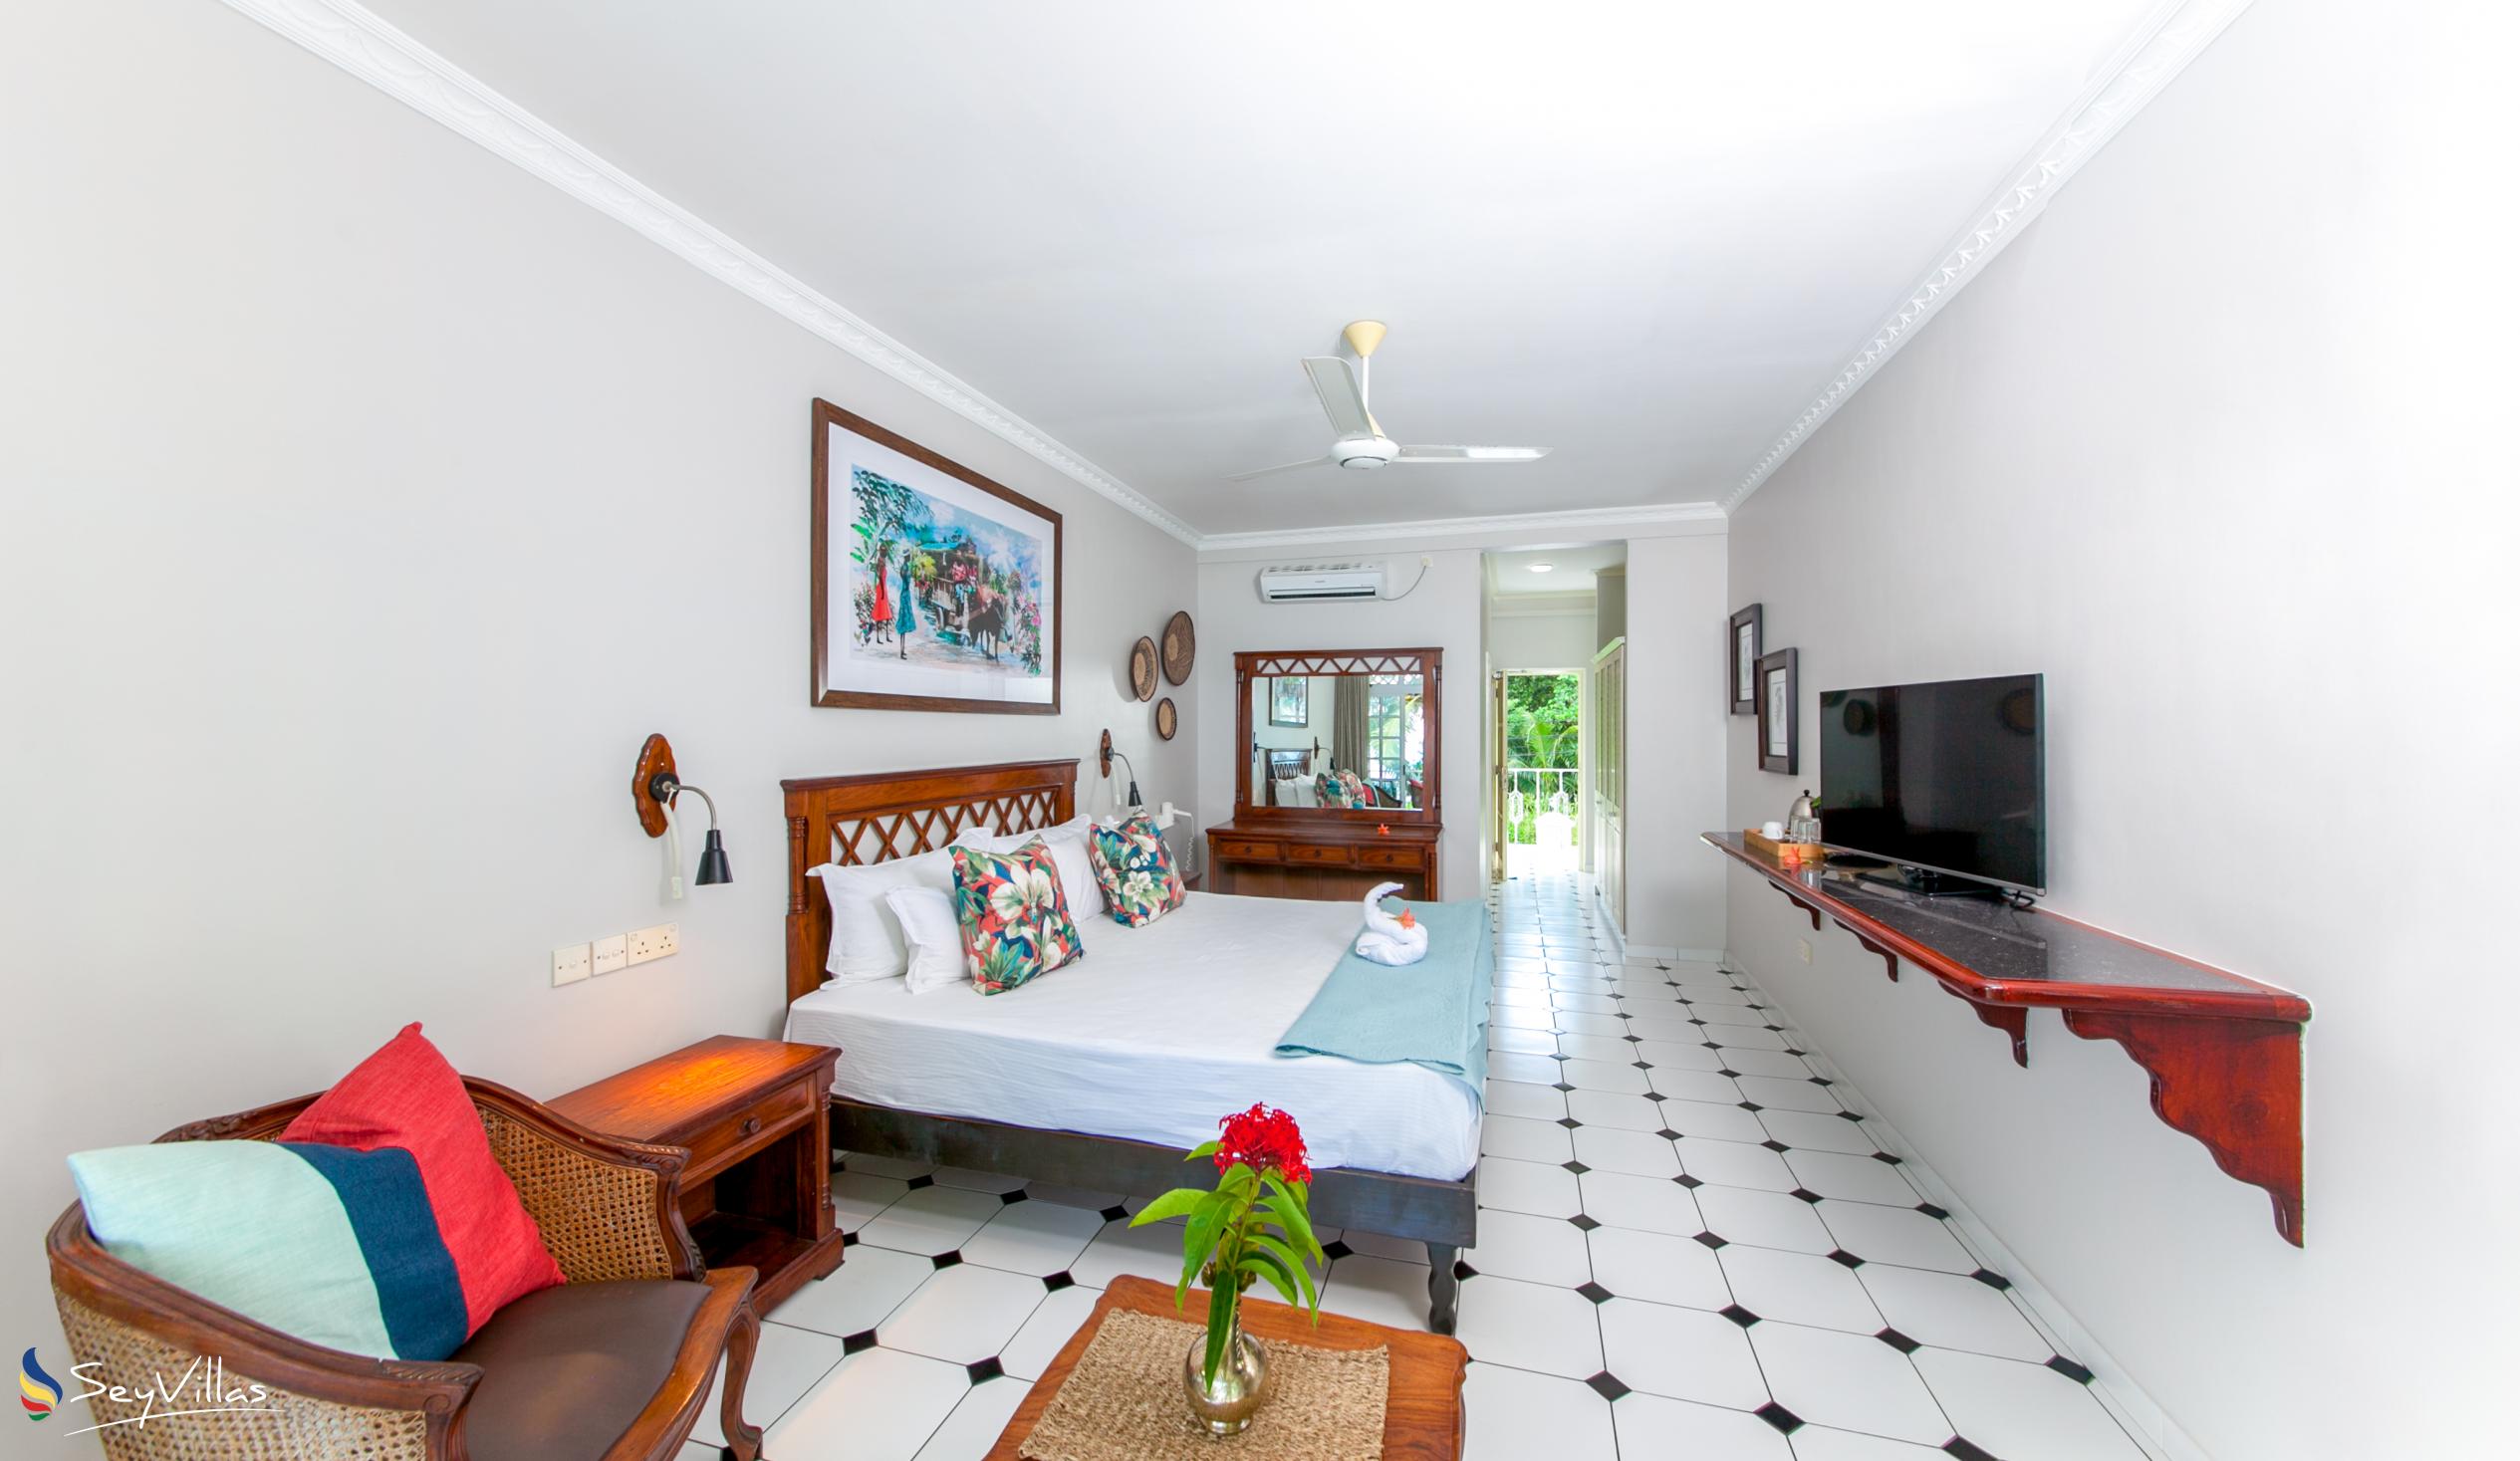 Foto 61: Palm Beach Hotel - Camera Standard - Praslin (Seychelles)